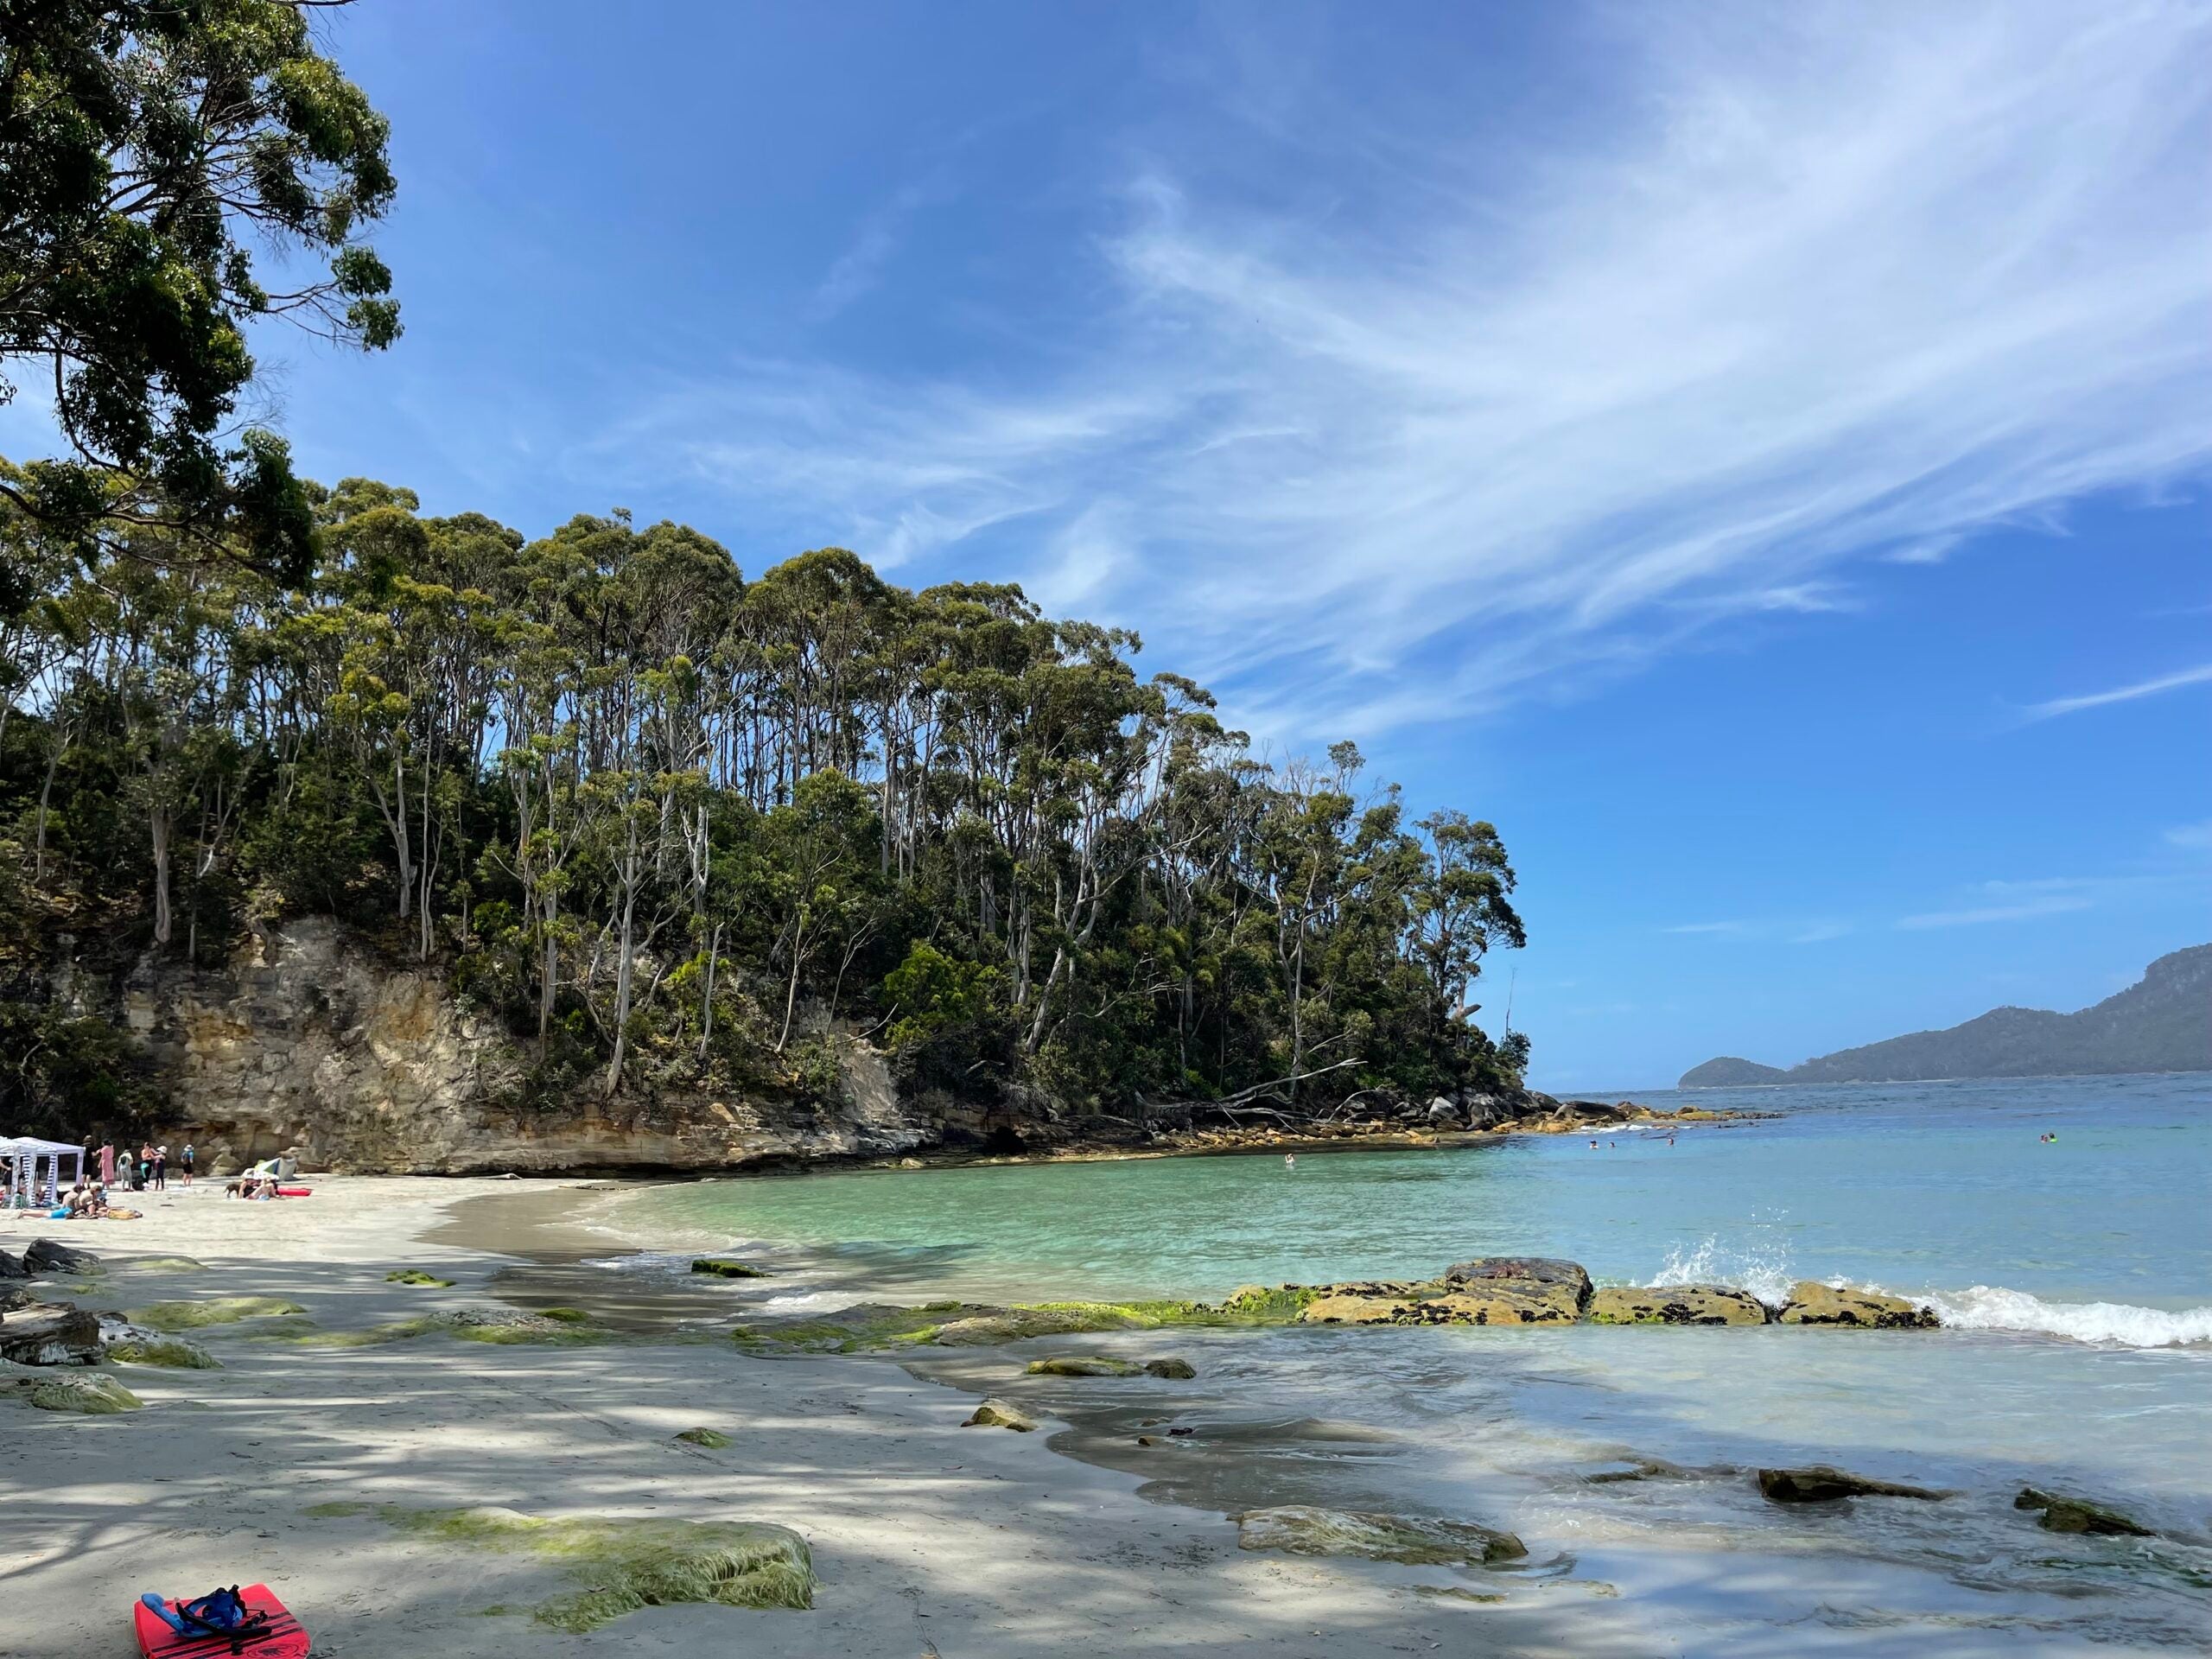 A beach on Bruny Island, Tasmania